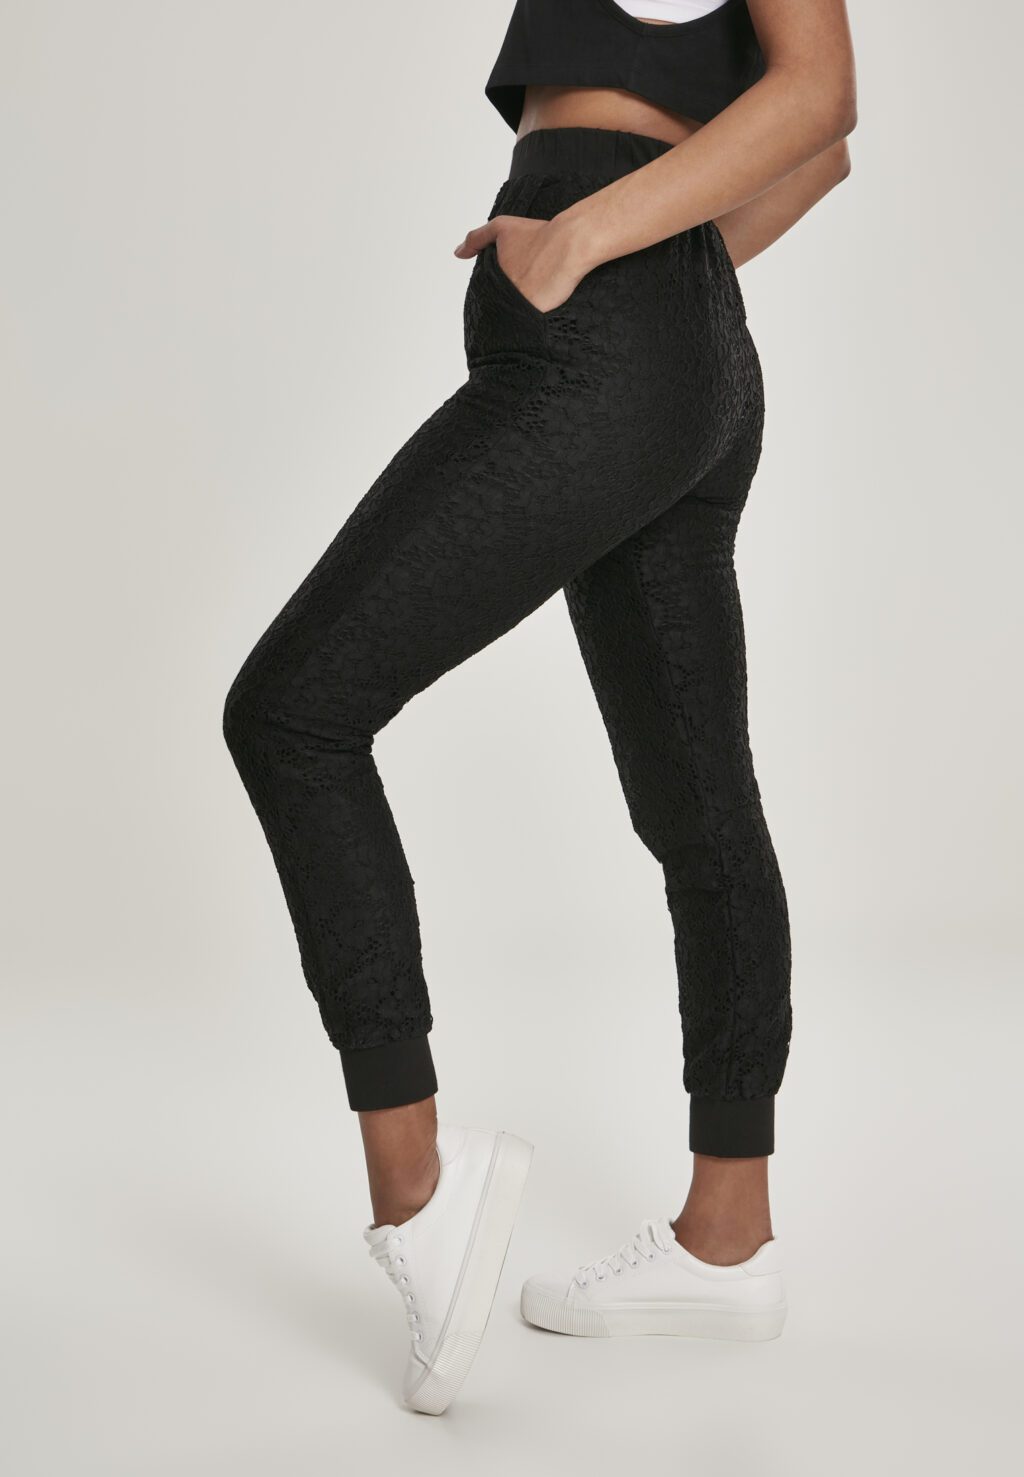 Urban Classics Ladies Lace Jersey Jog Pants black TB2804